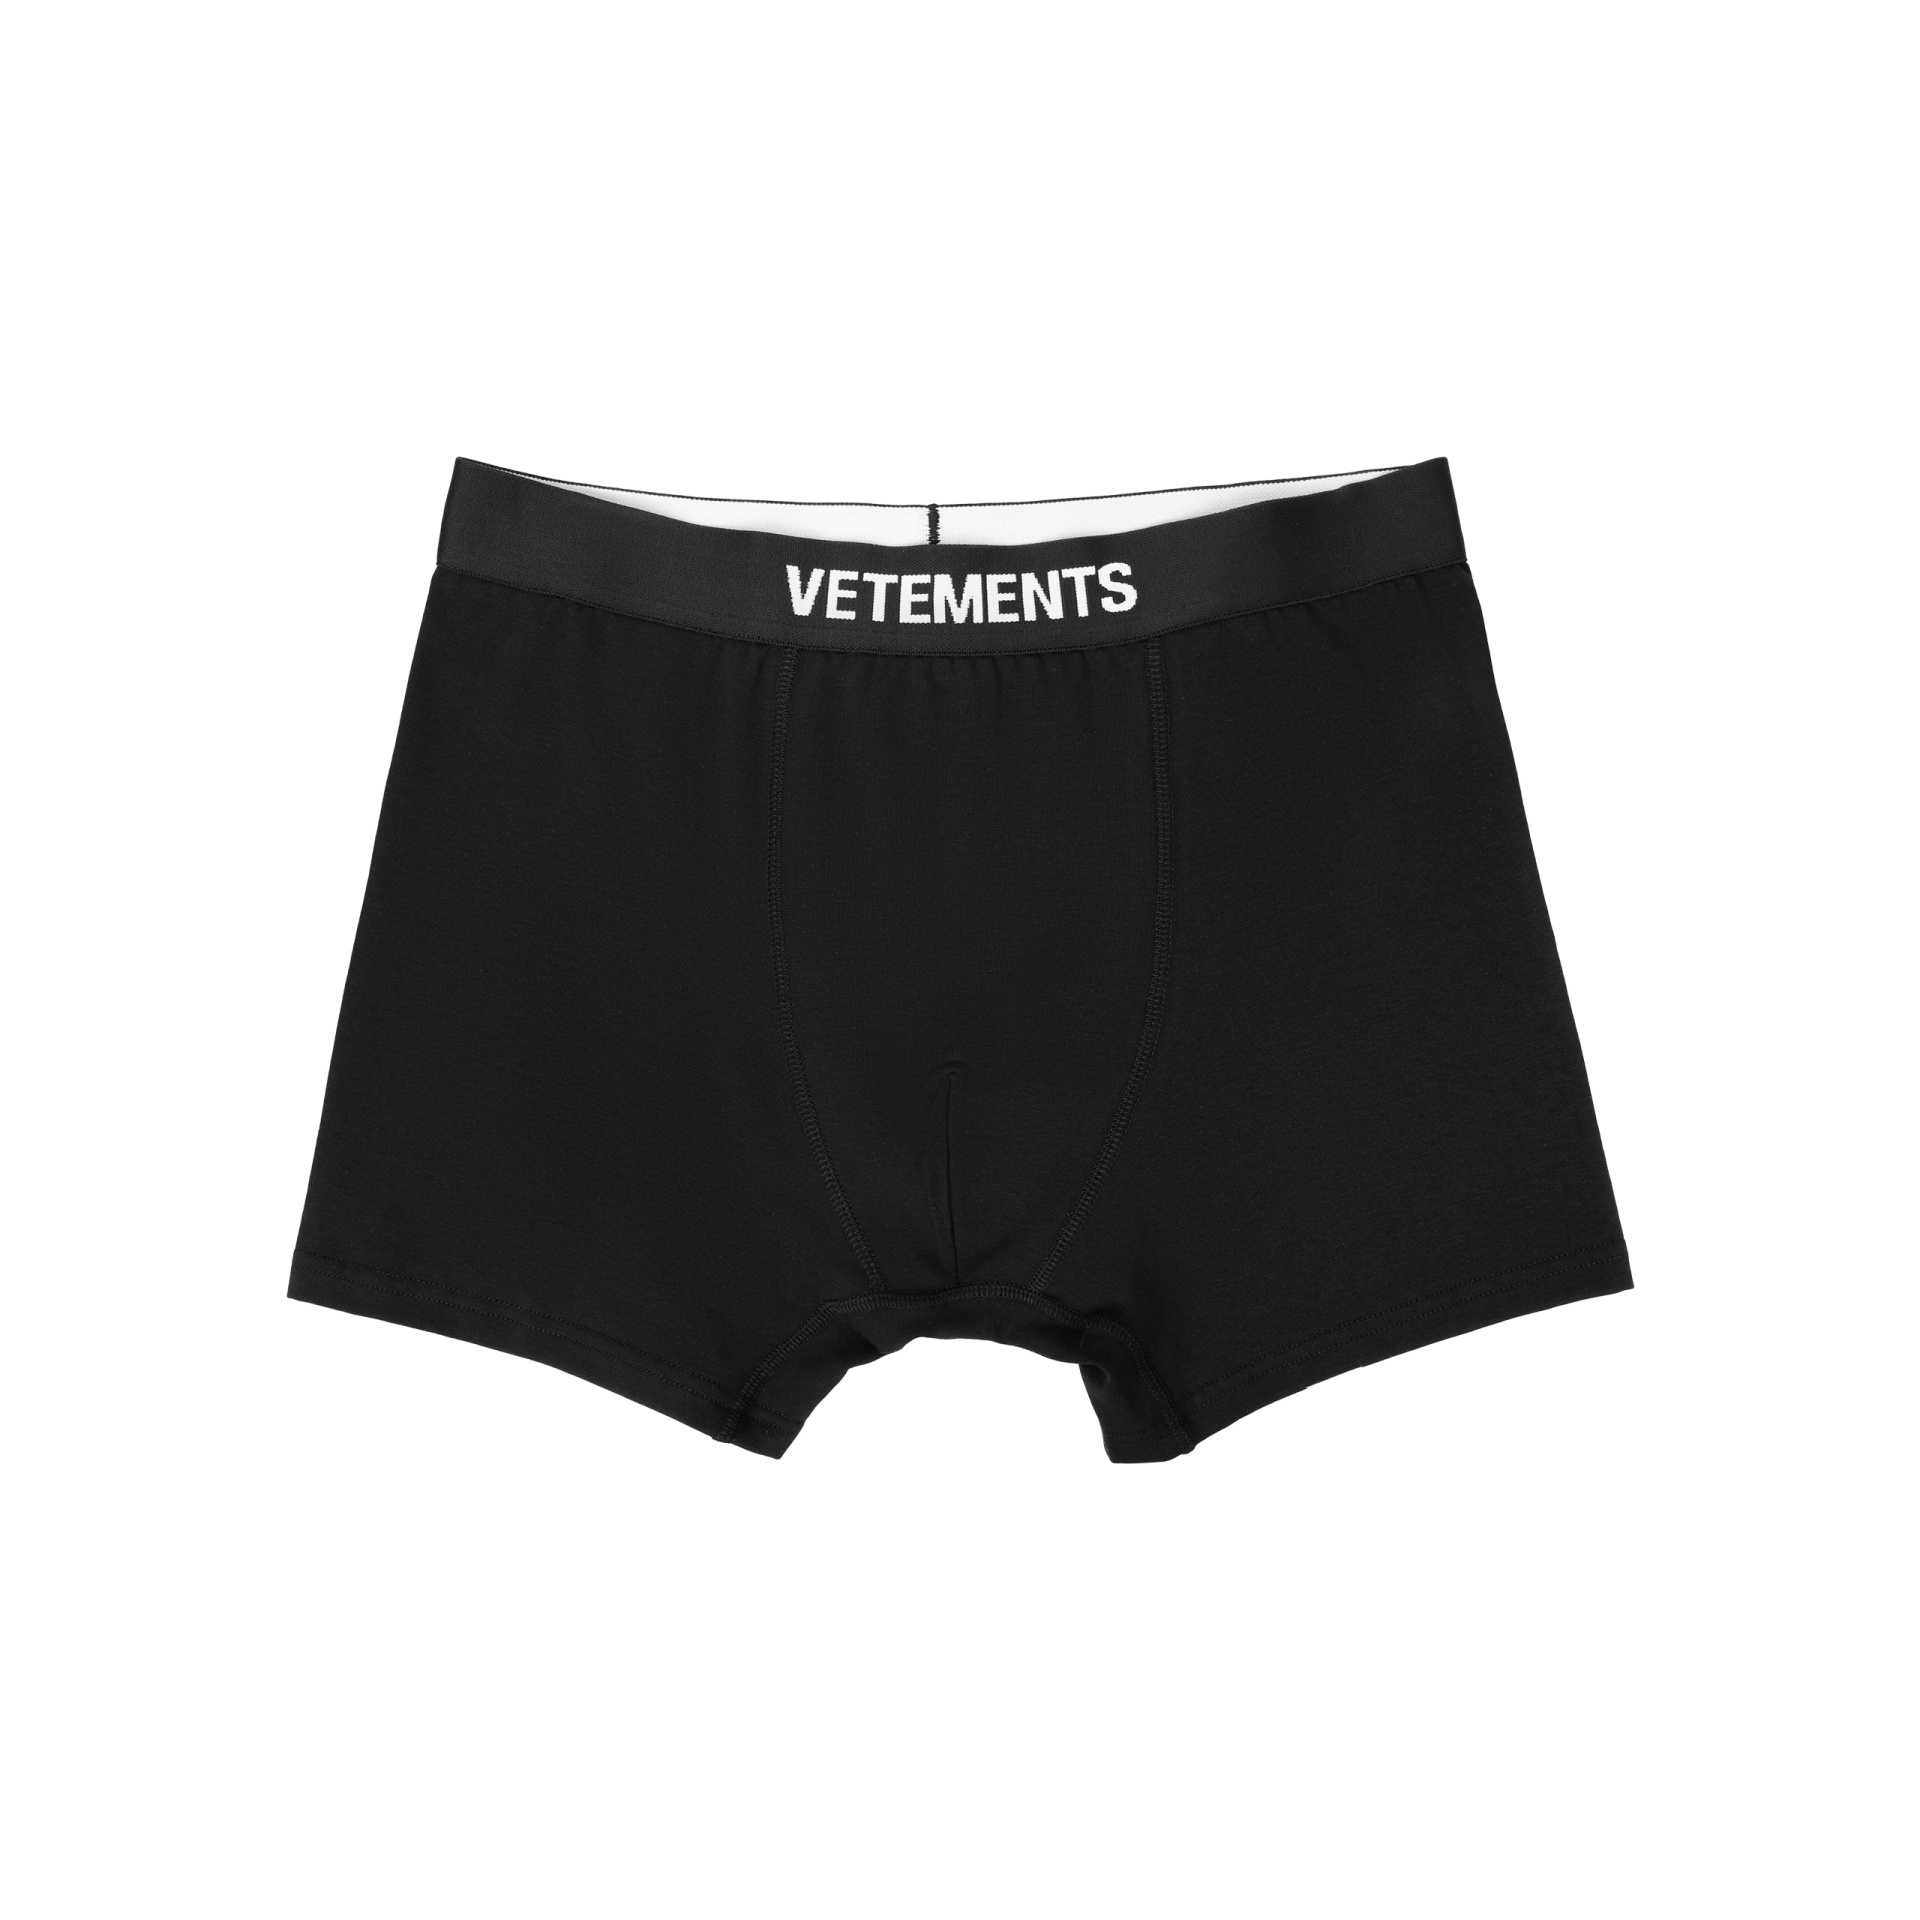 Shop VETEMENTS underwear for men online at SV77